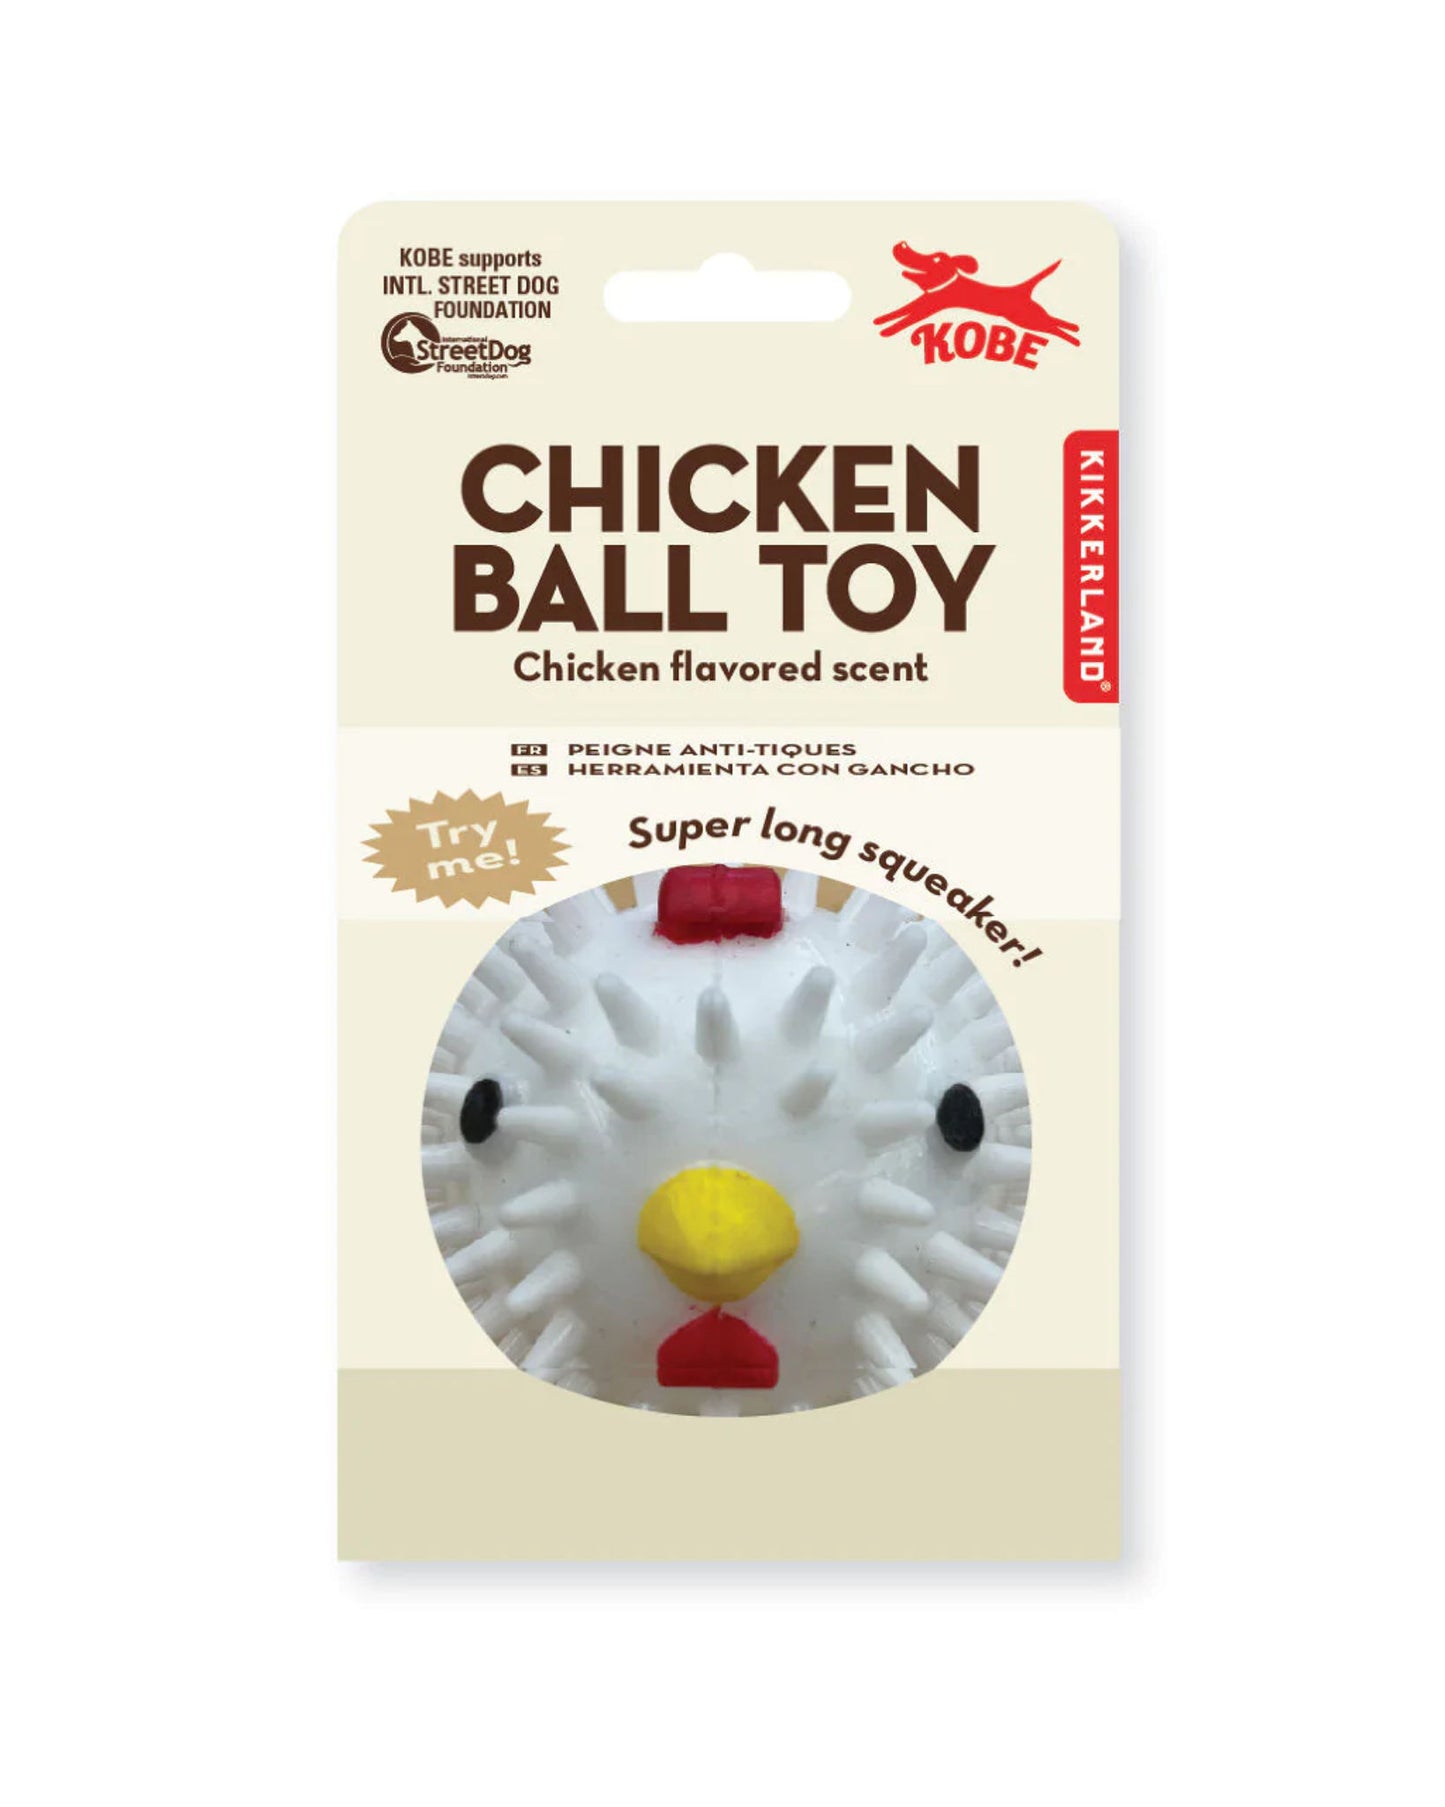 Chicken Dog Ball